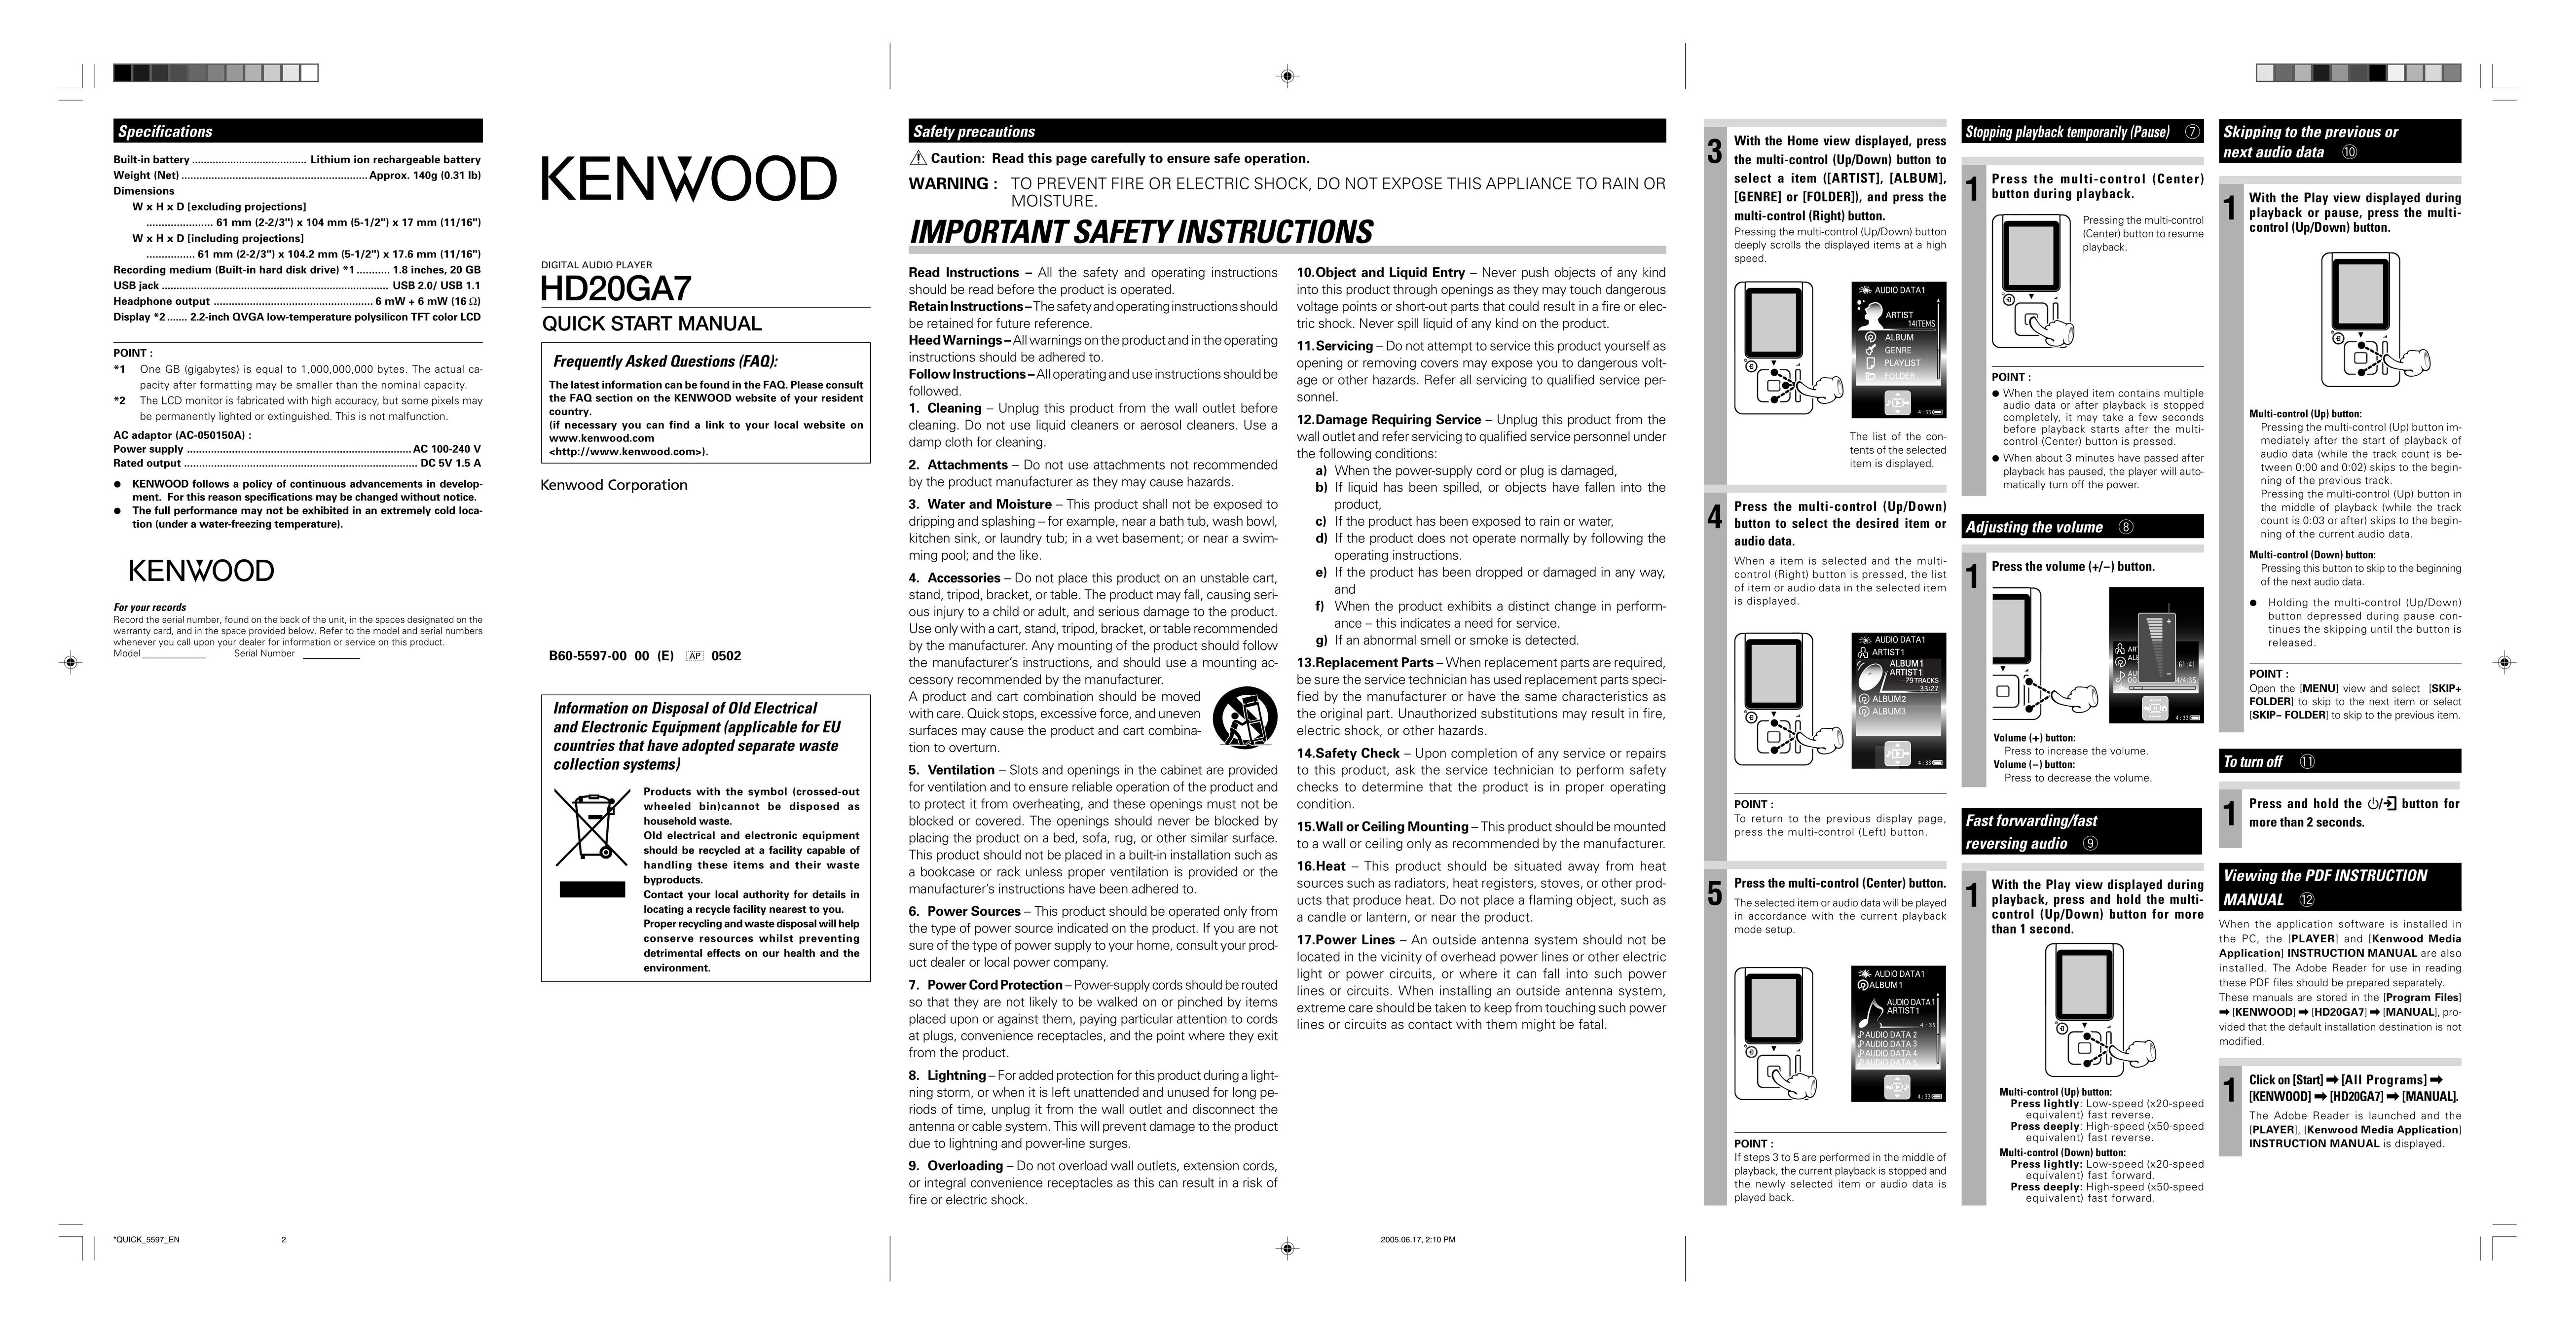 Kenwood HD20GA7 MP3 Player User Manual